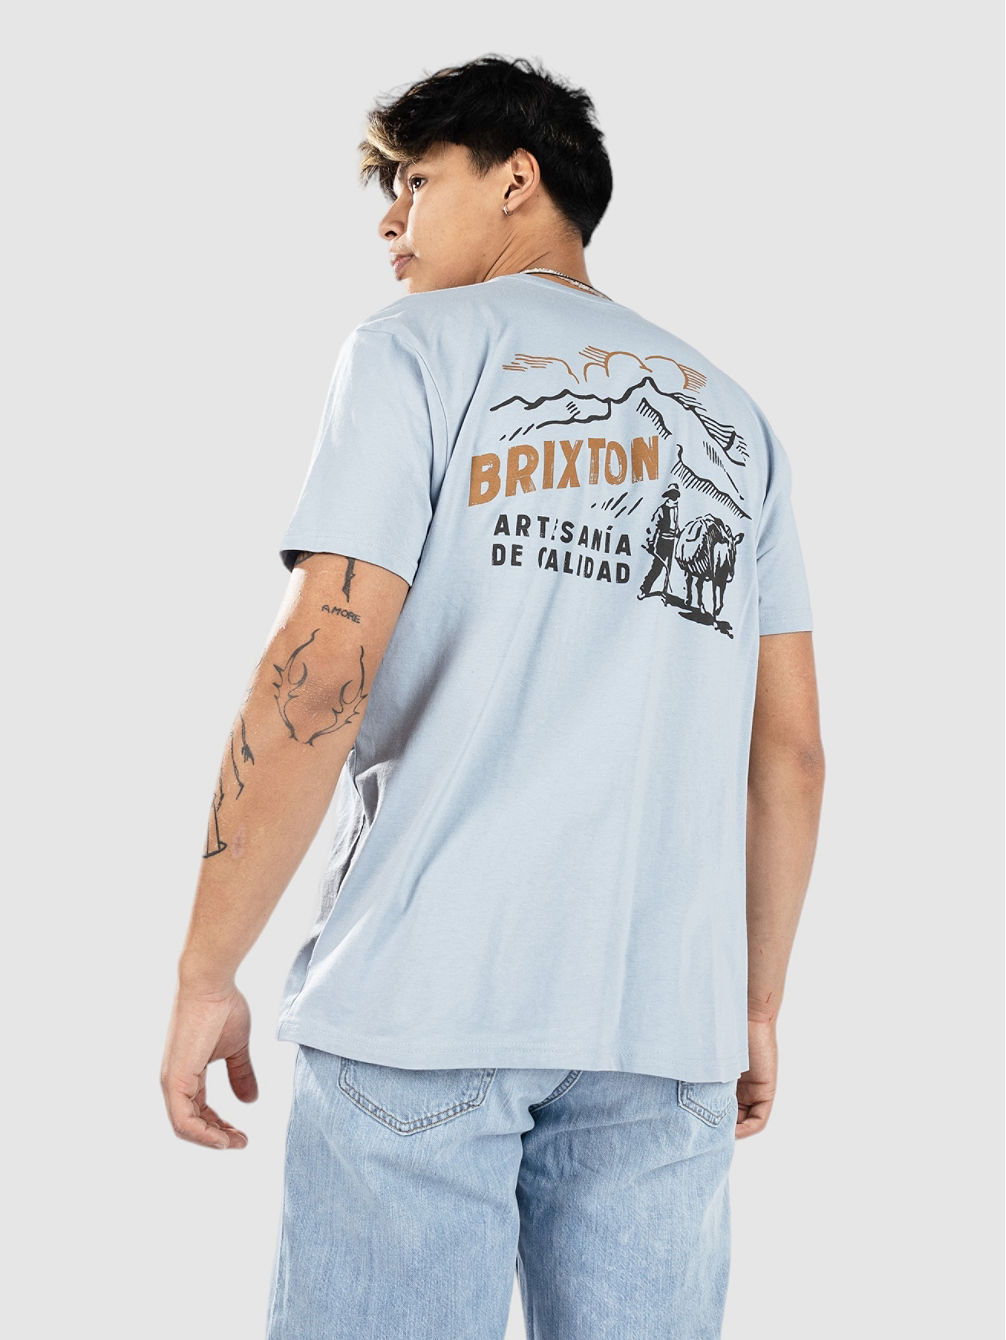 Harvester Tailored Camiseta